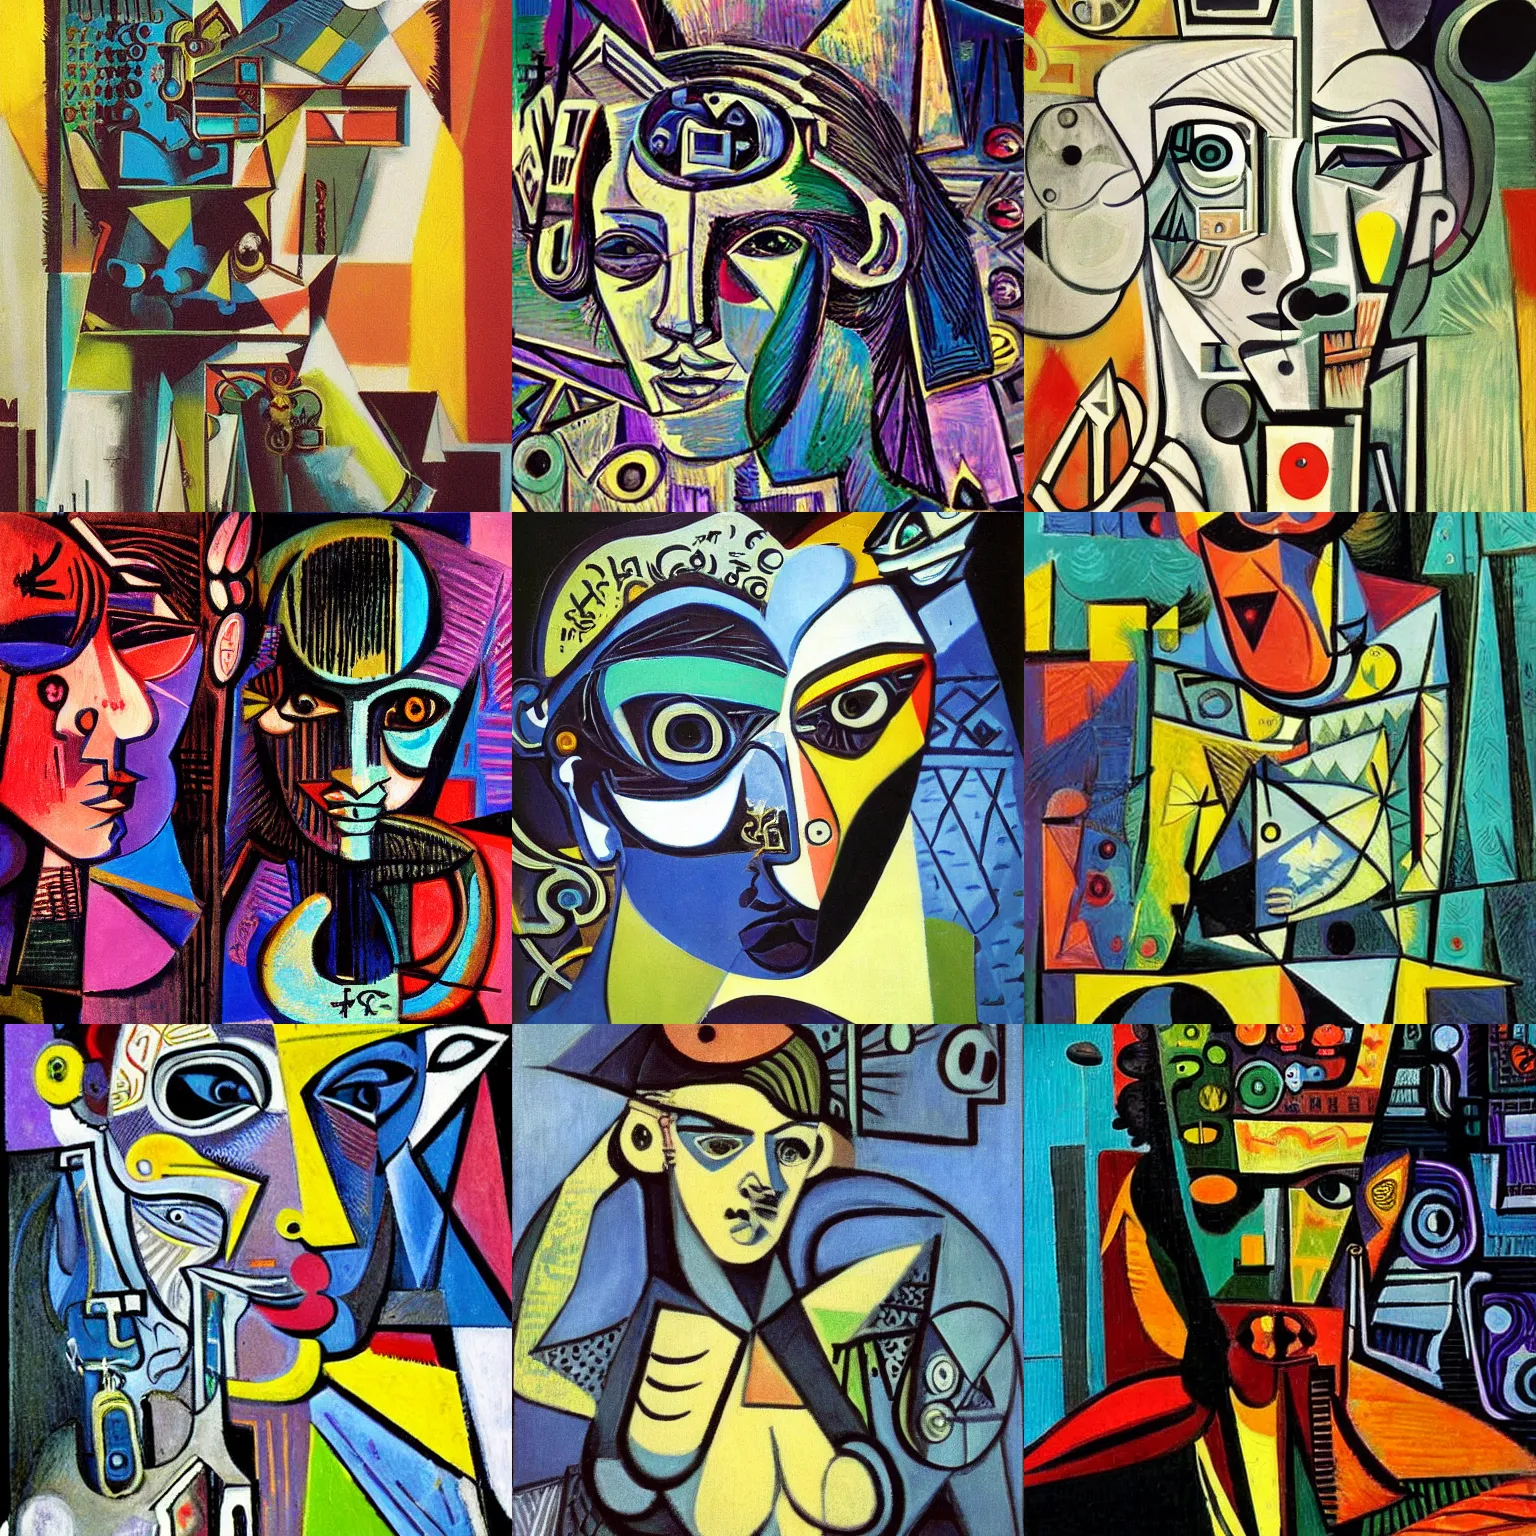 Cyberpunk art by Pablo Picasso